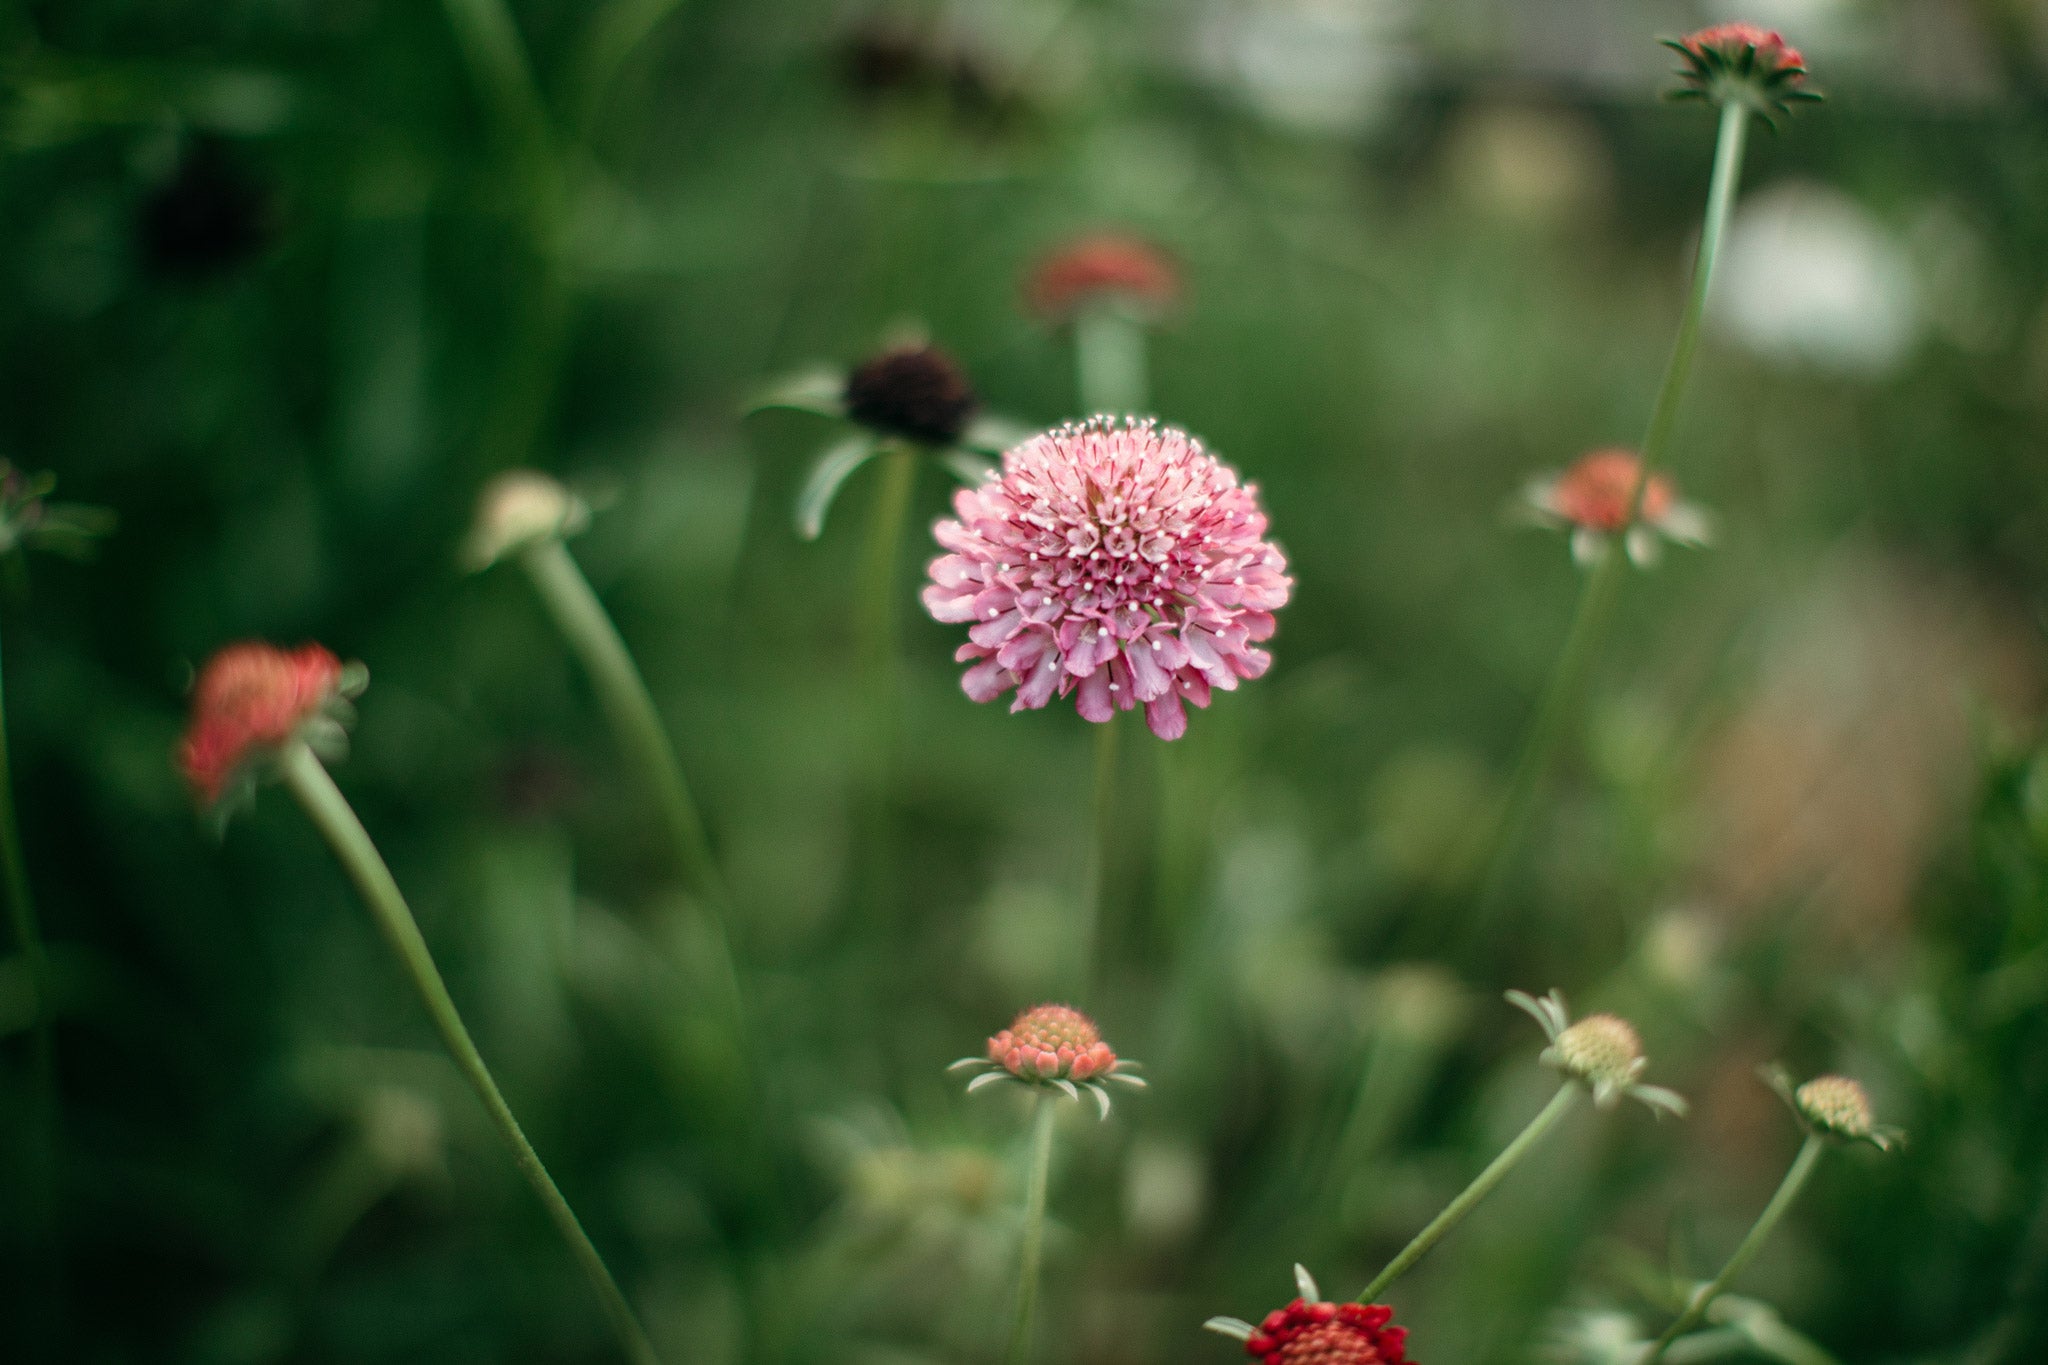 Scabiosa blooming in Native Poppy's garden